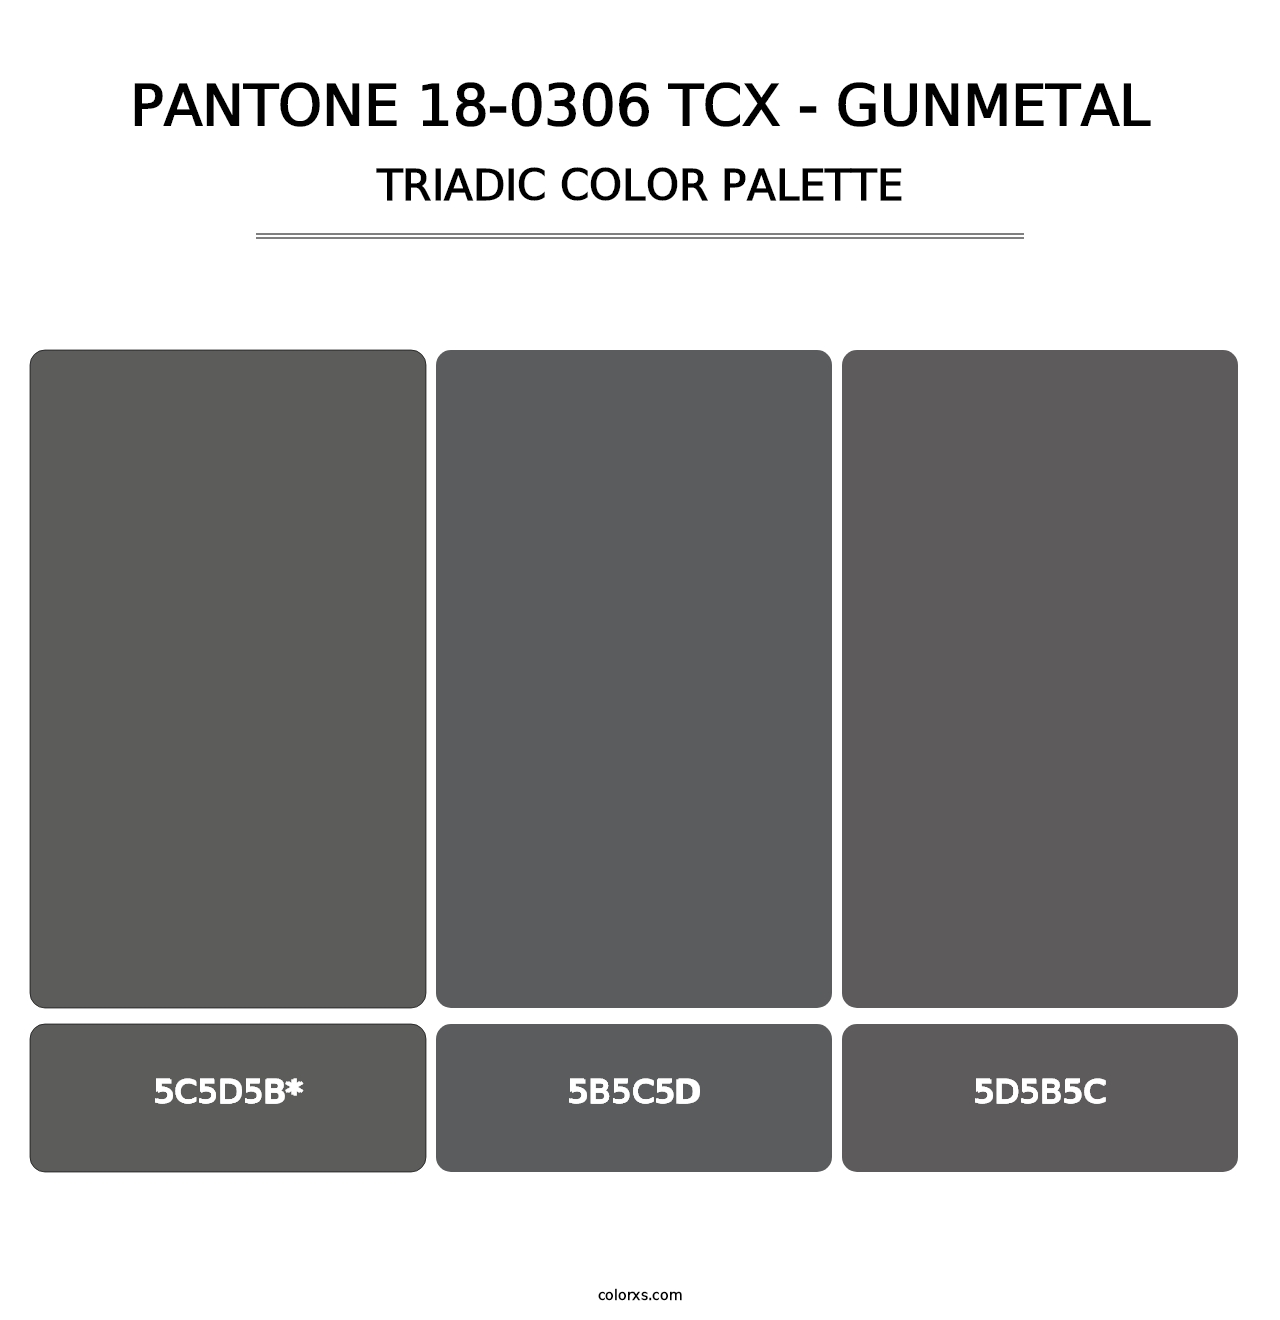 PANTONE 18-0306 TCX - Gunmetal - Triadic Color Palette